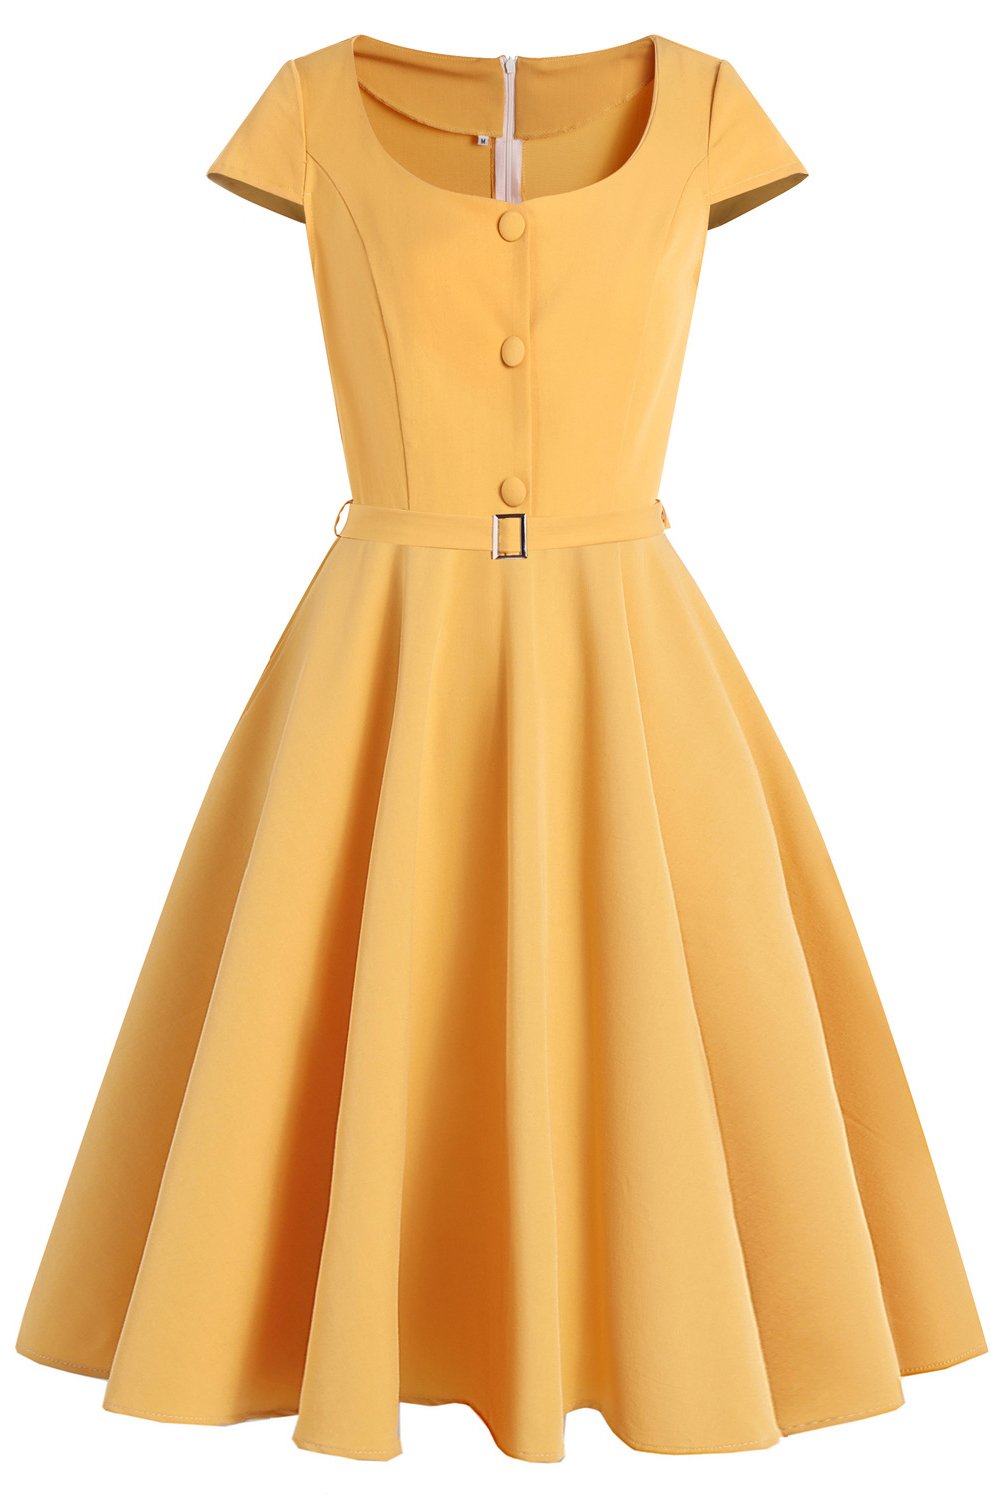 Yellow Solid 1950s Swing Dress